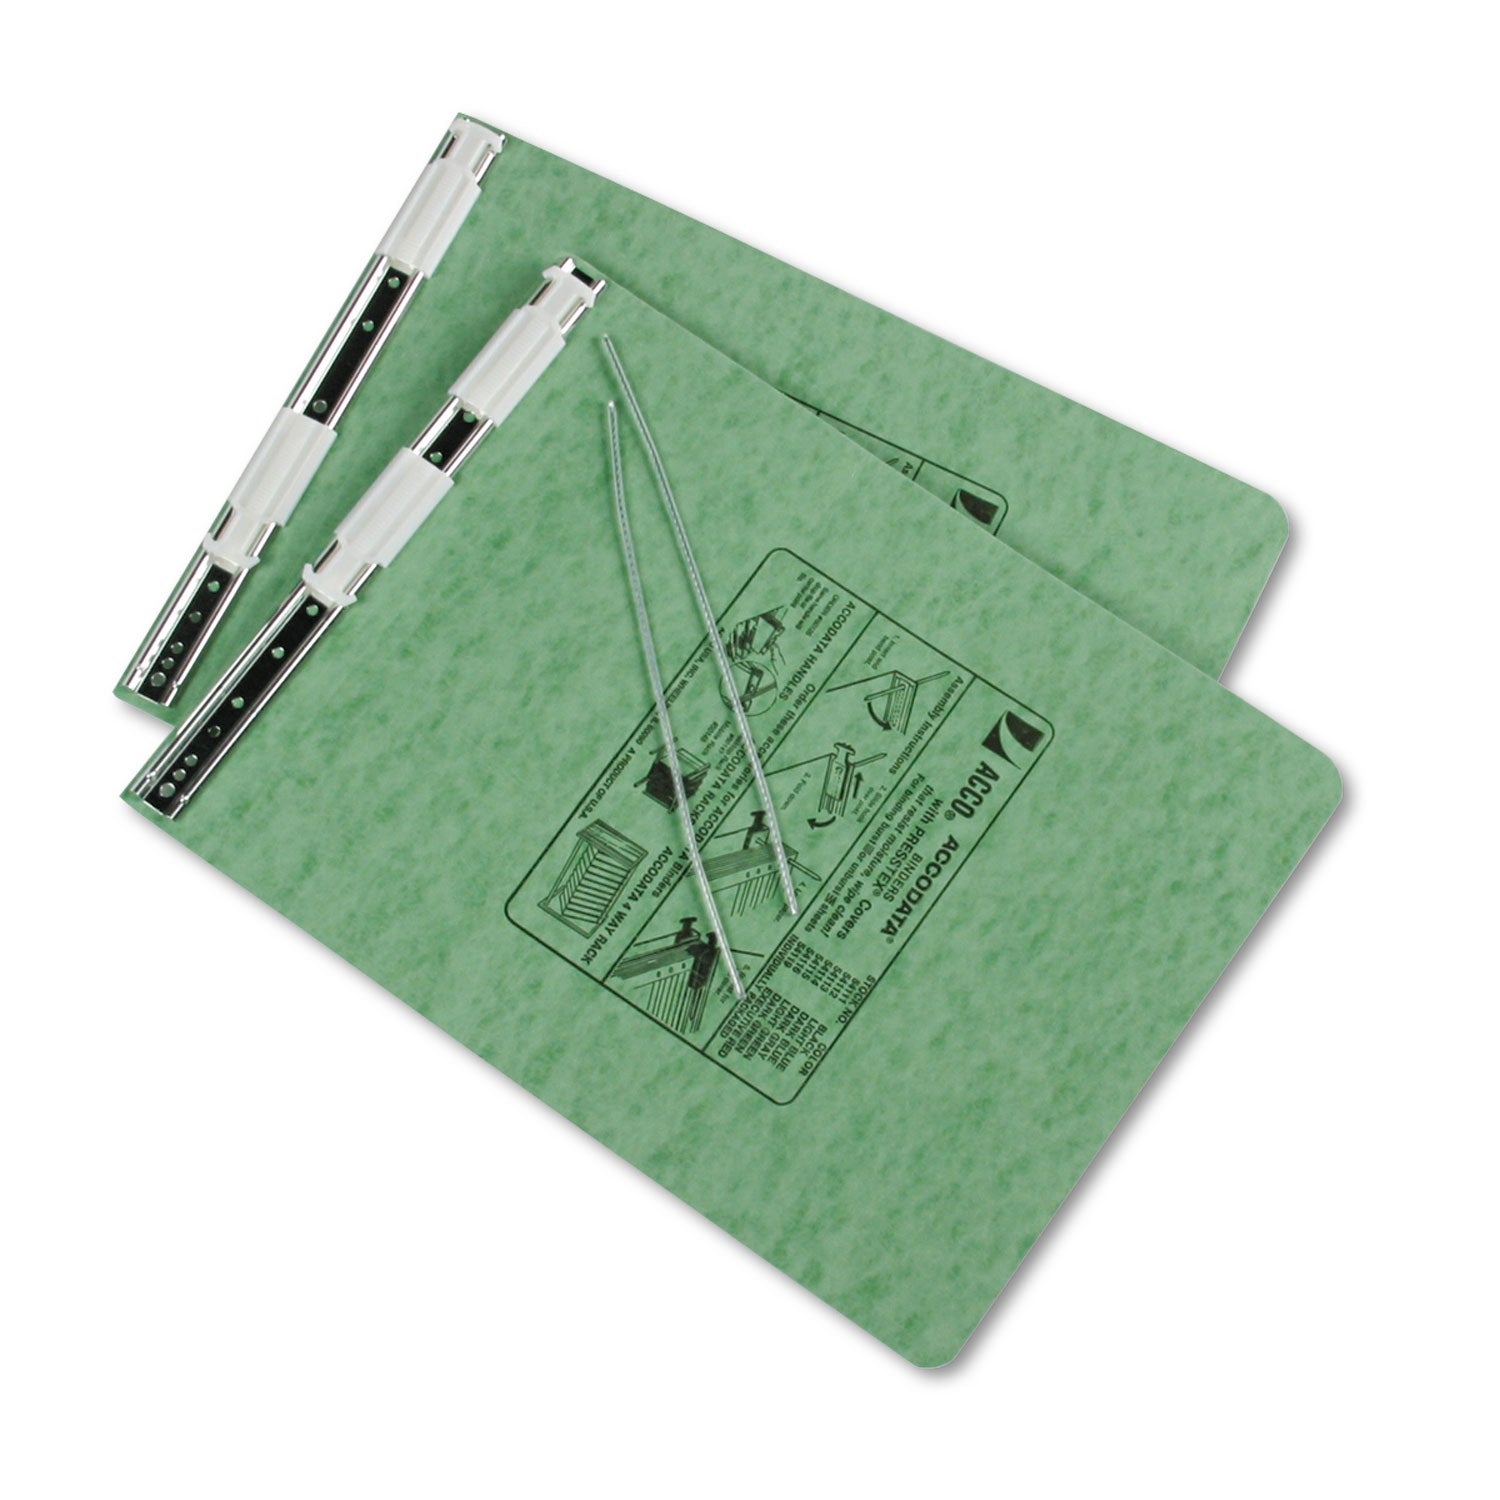 PRESSTEX Covers with Storage Hooks, 2 Posts, 6" Capacity, 9.5 x 11, Light Green - 